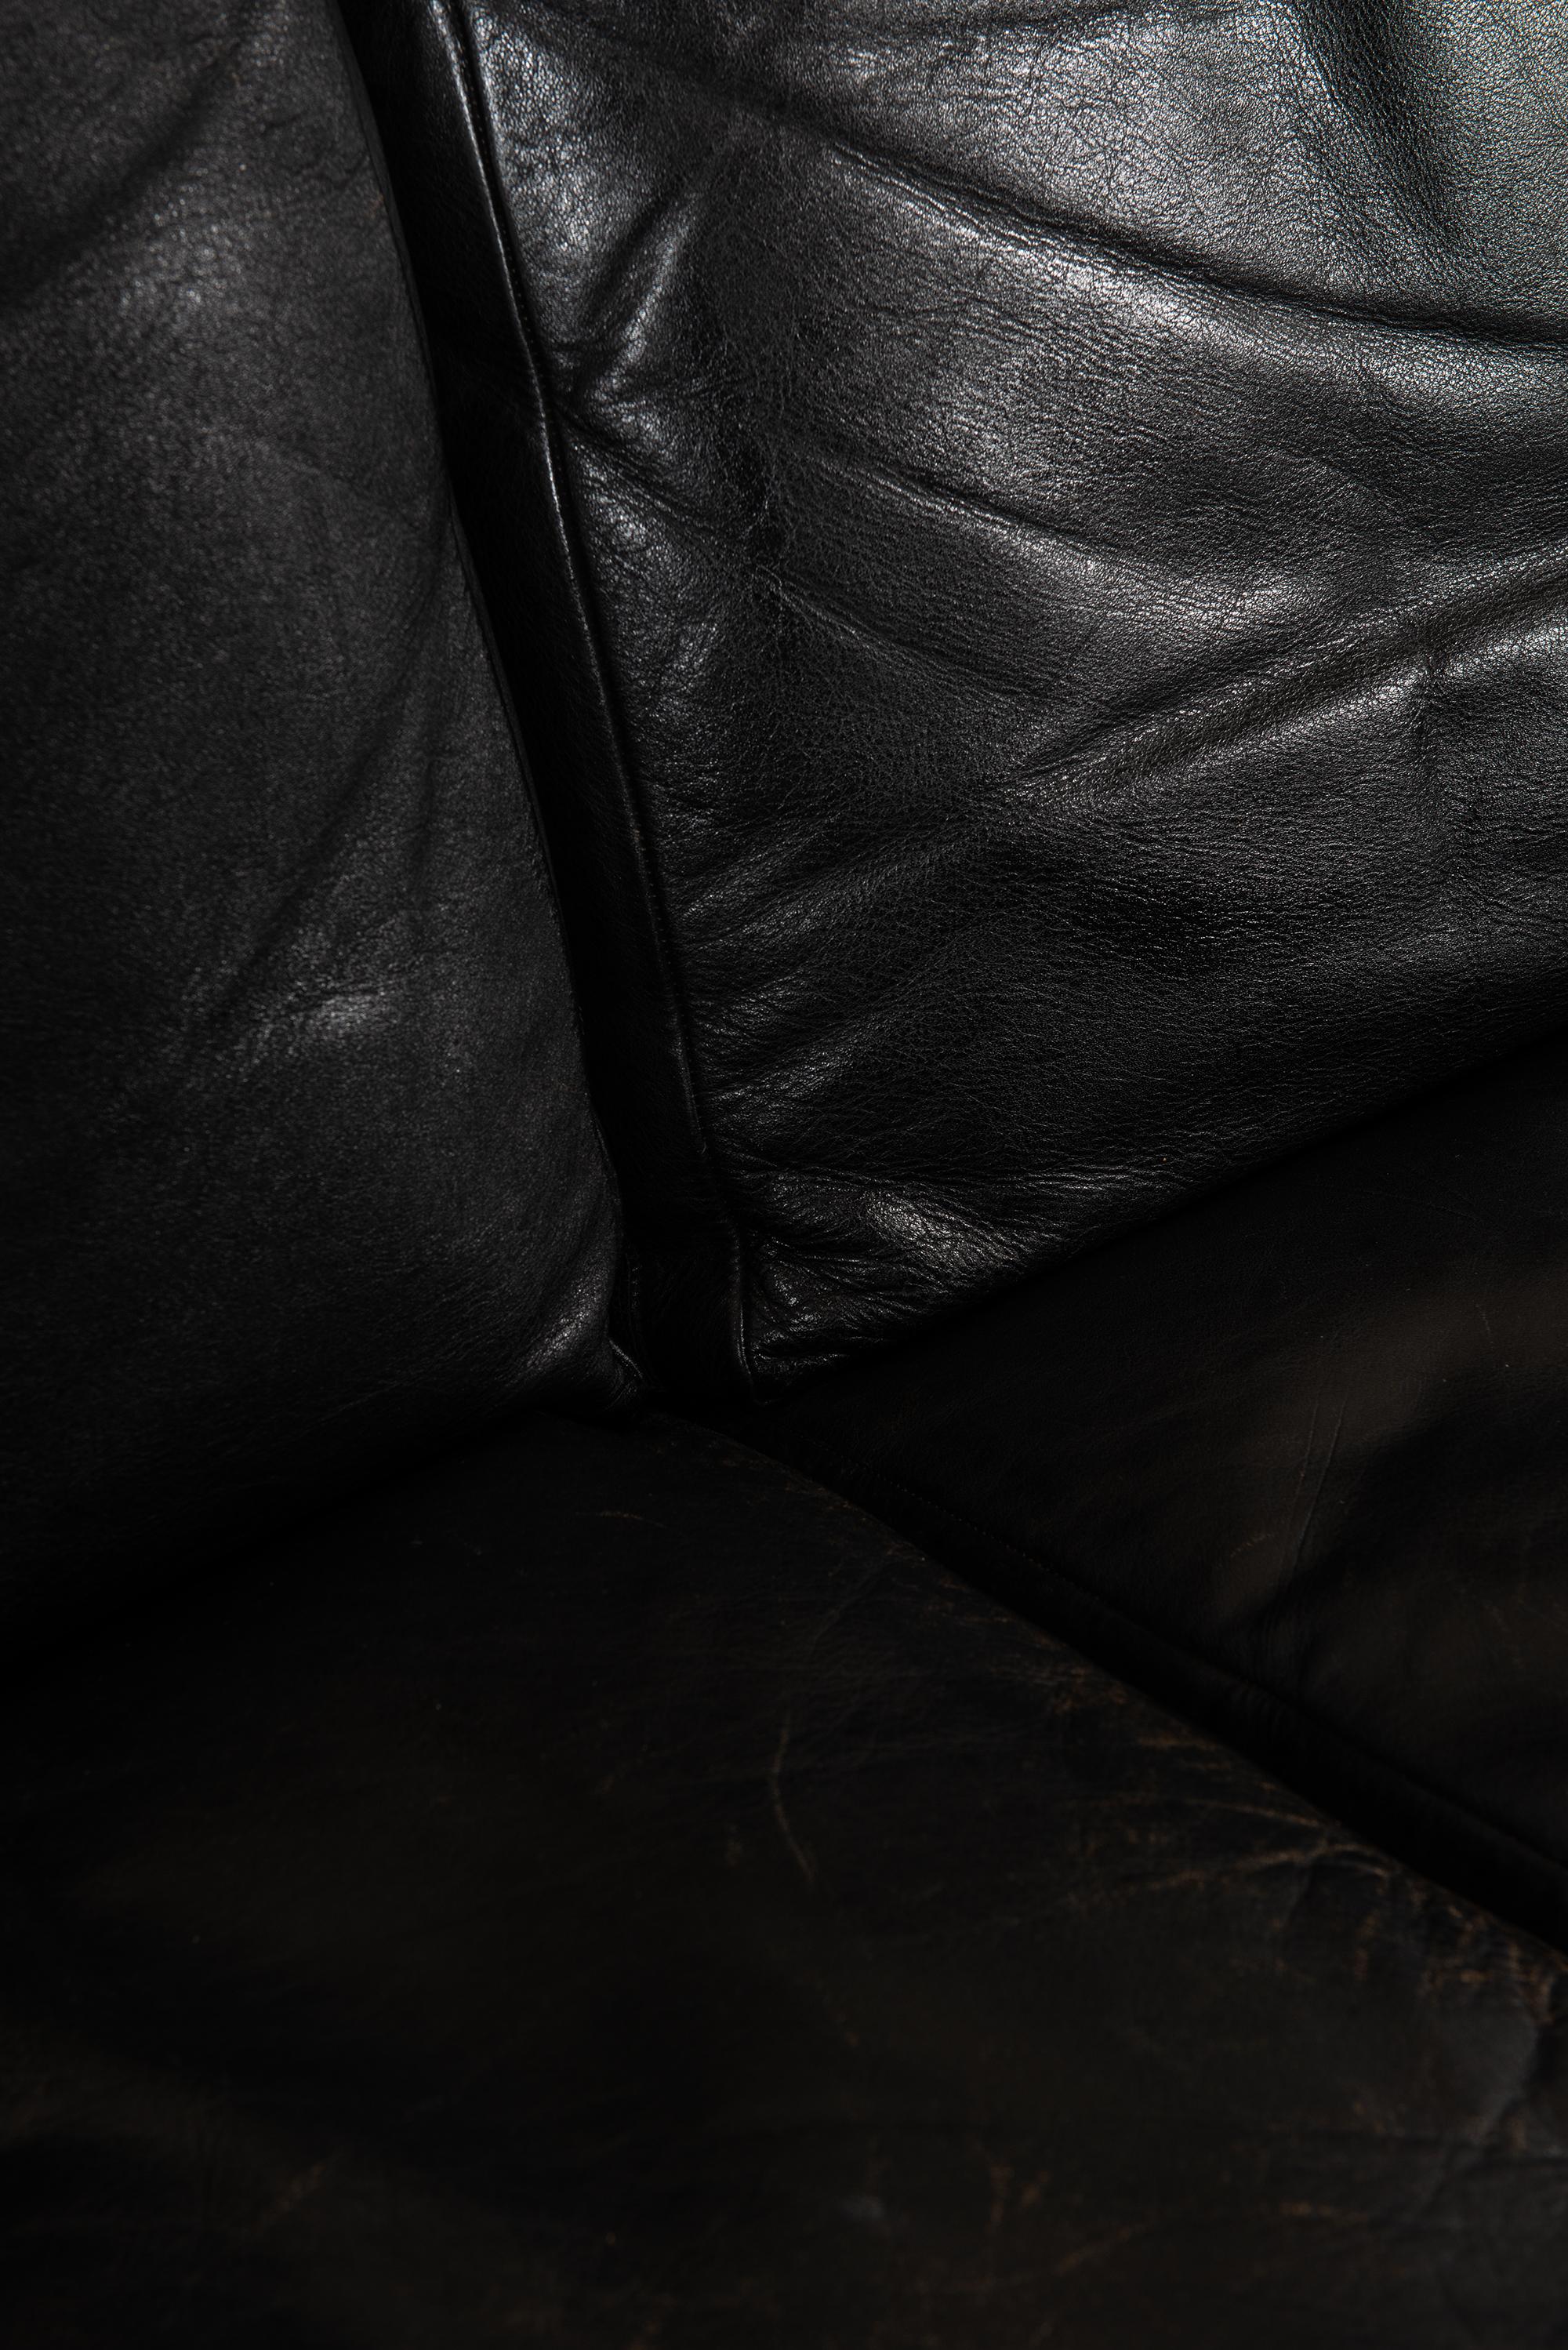 Very rare sofa designed by Illum Wikkelsø. Produced by Michael Laursen in Denmark.